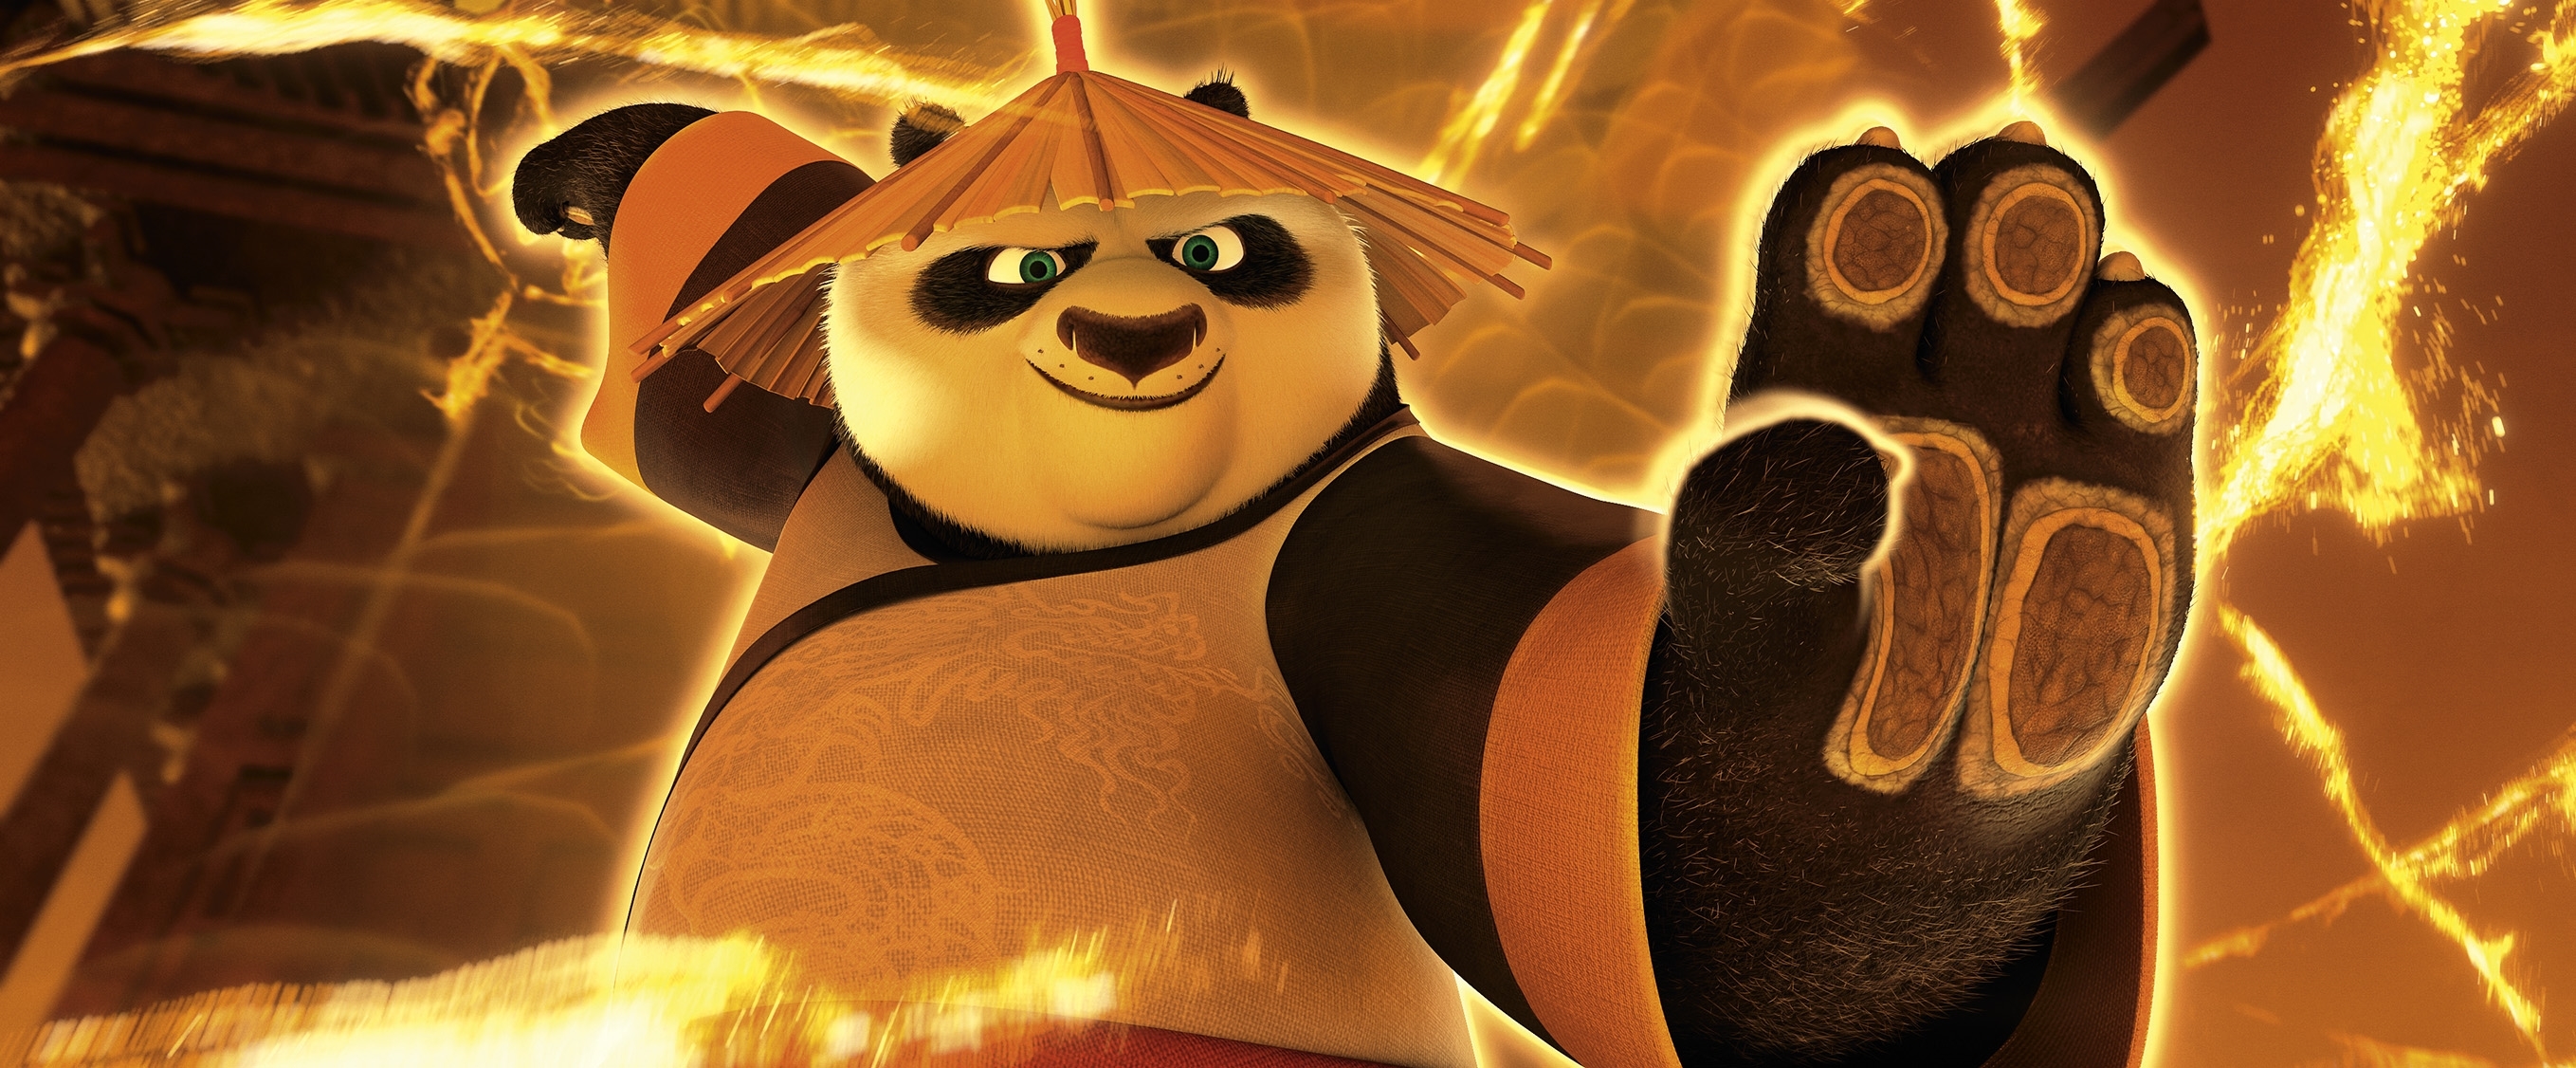 Image du film Kung Fu Panda 3 ba565c1b-4d83-4299-8476-4378917e4d85